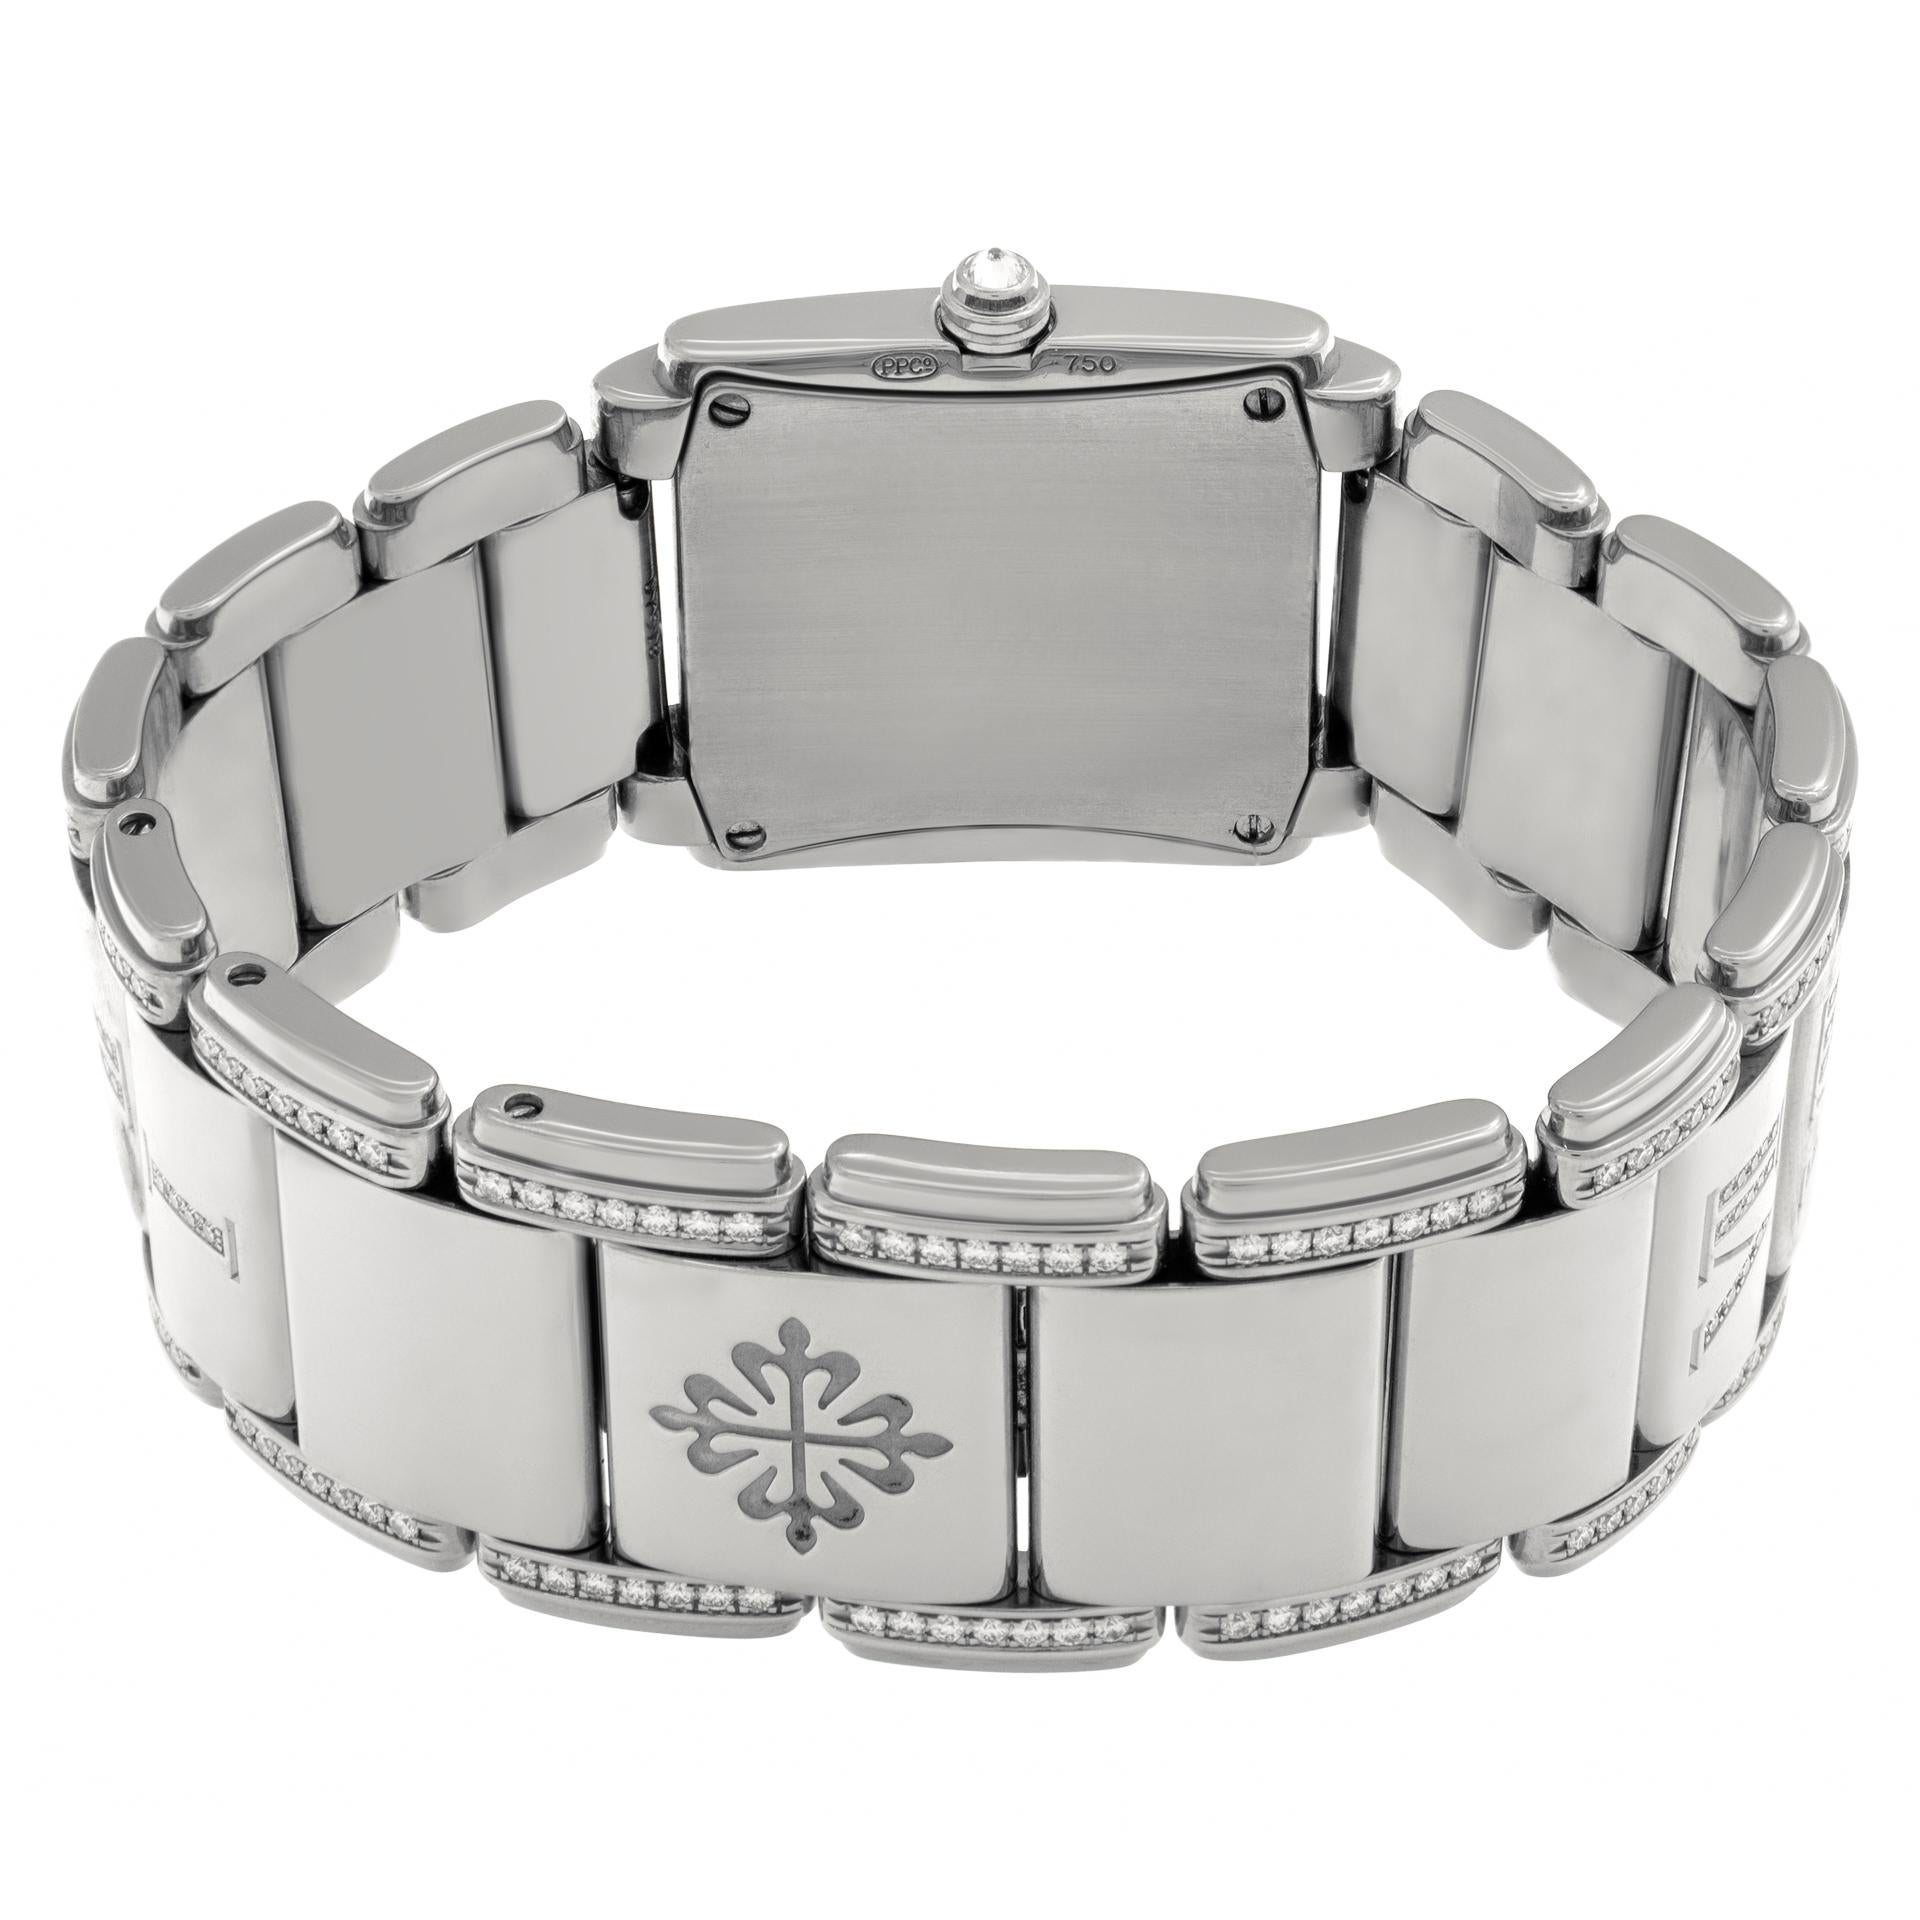 Women's Patek Philippe Twenty 4 18k White Gold Wristwatch Ref 4910/41